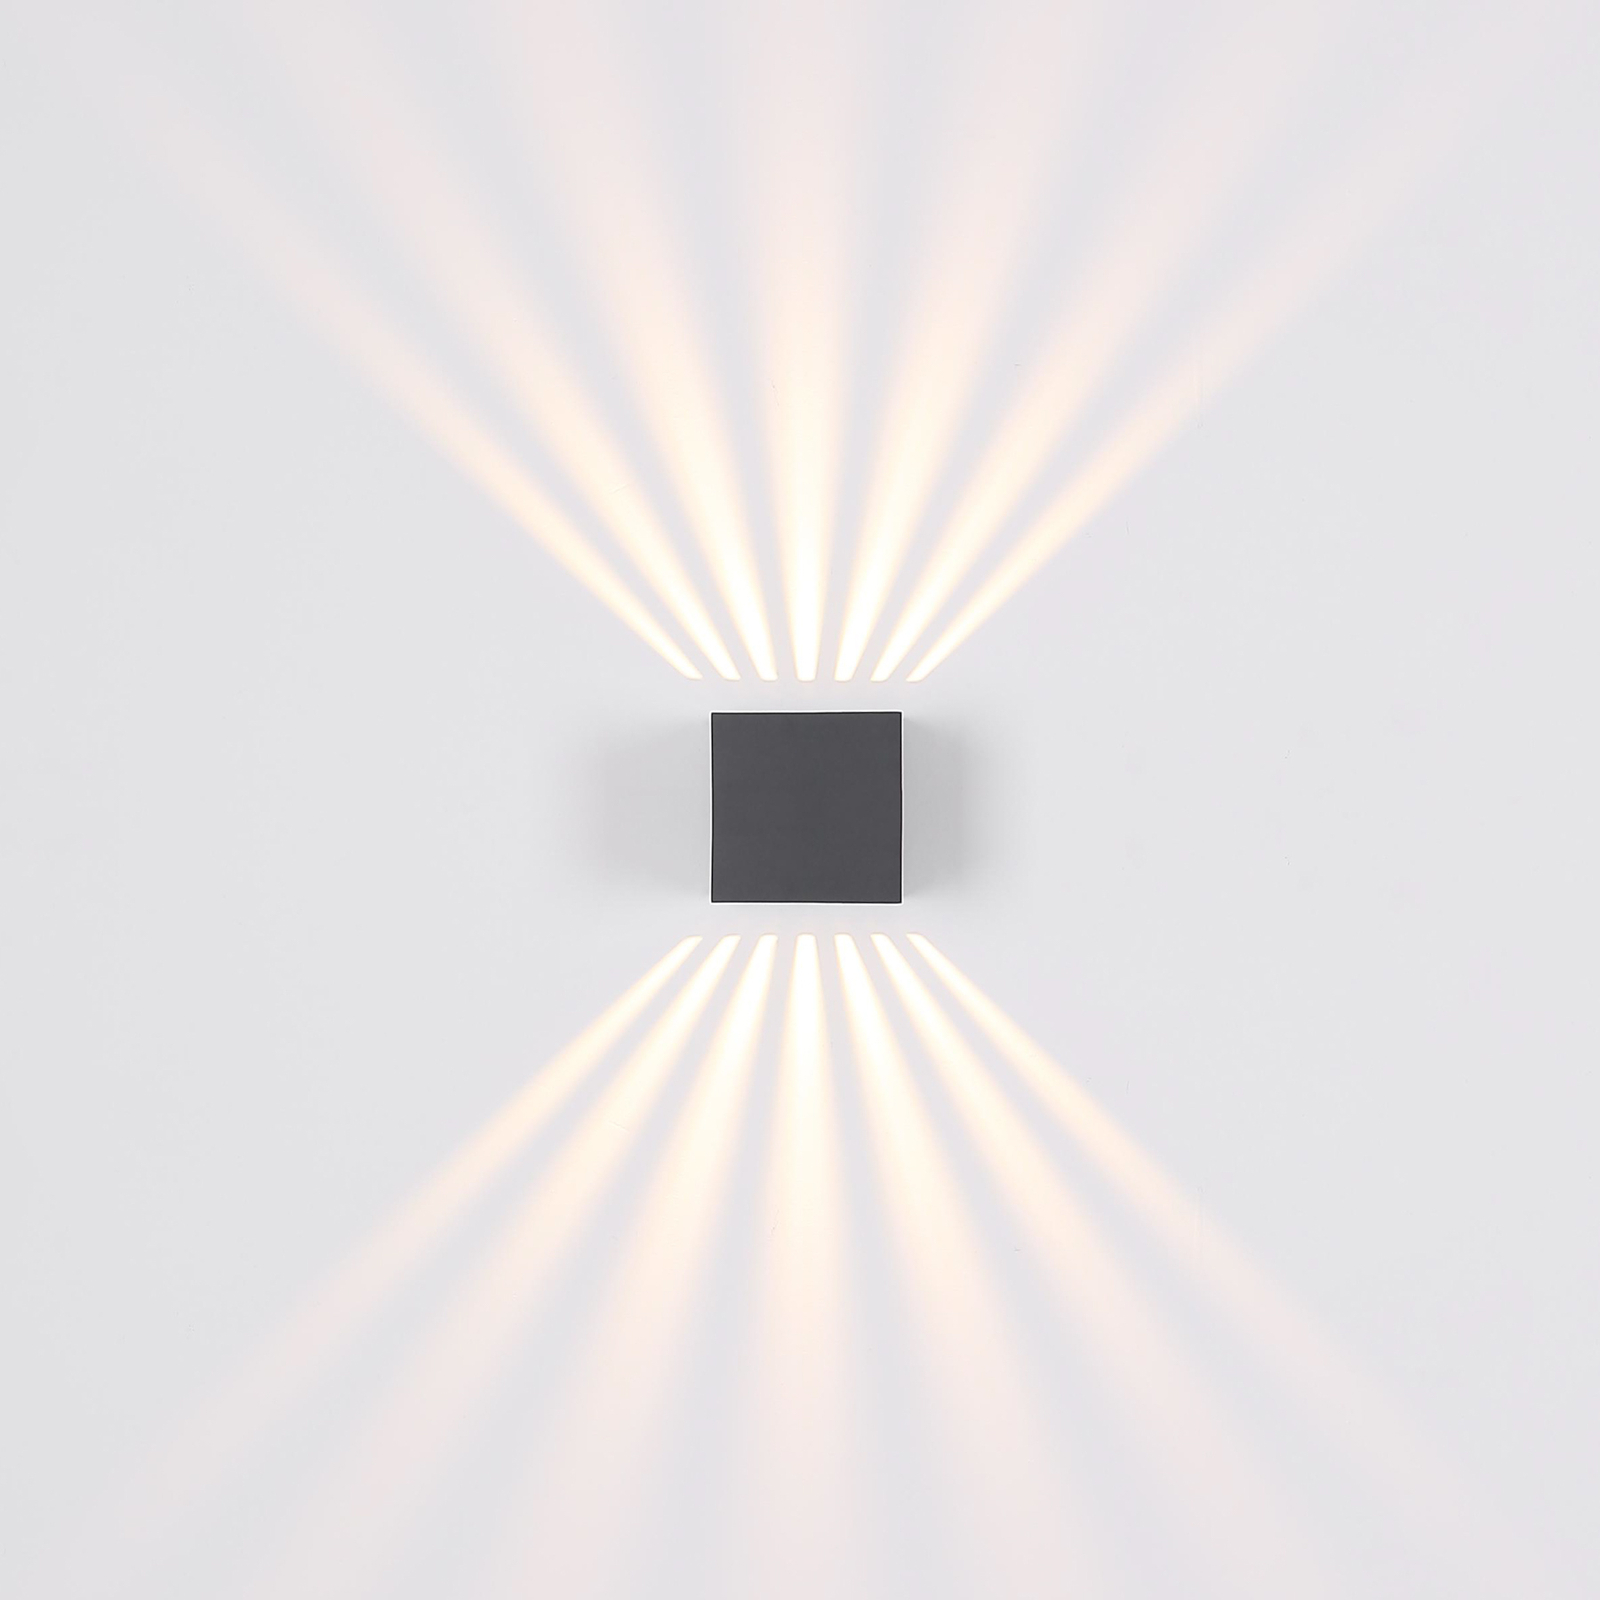 LED-Außenwandlampe Illi, anthrazit, Breite 10 cm, Alu, IP54